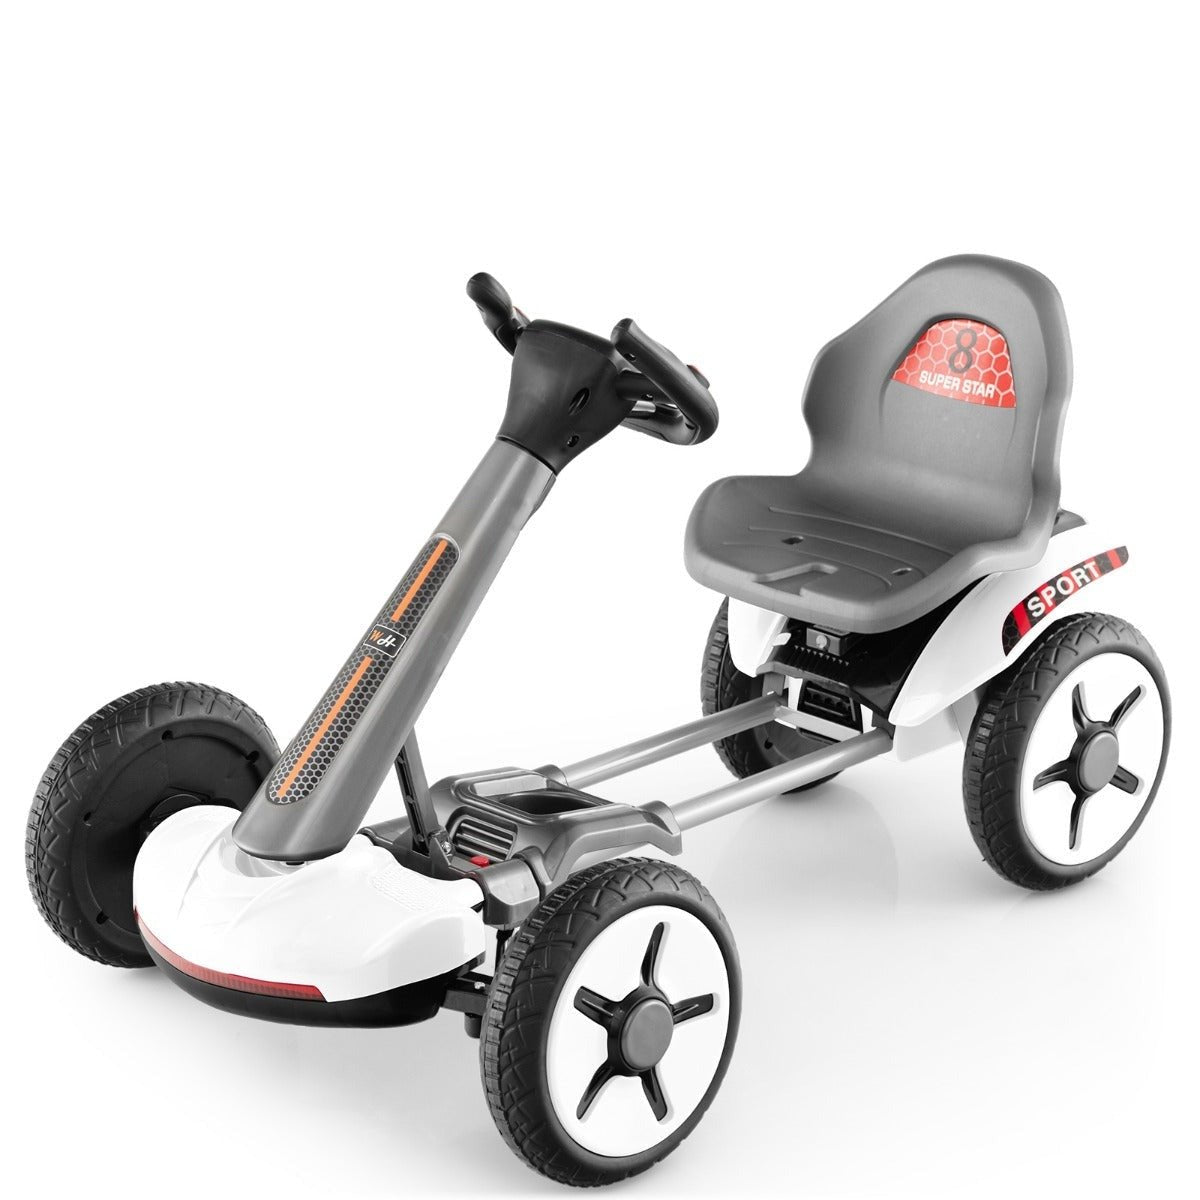 Adventure-Ready Kids Go Kart with 4 Wheels